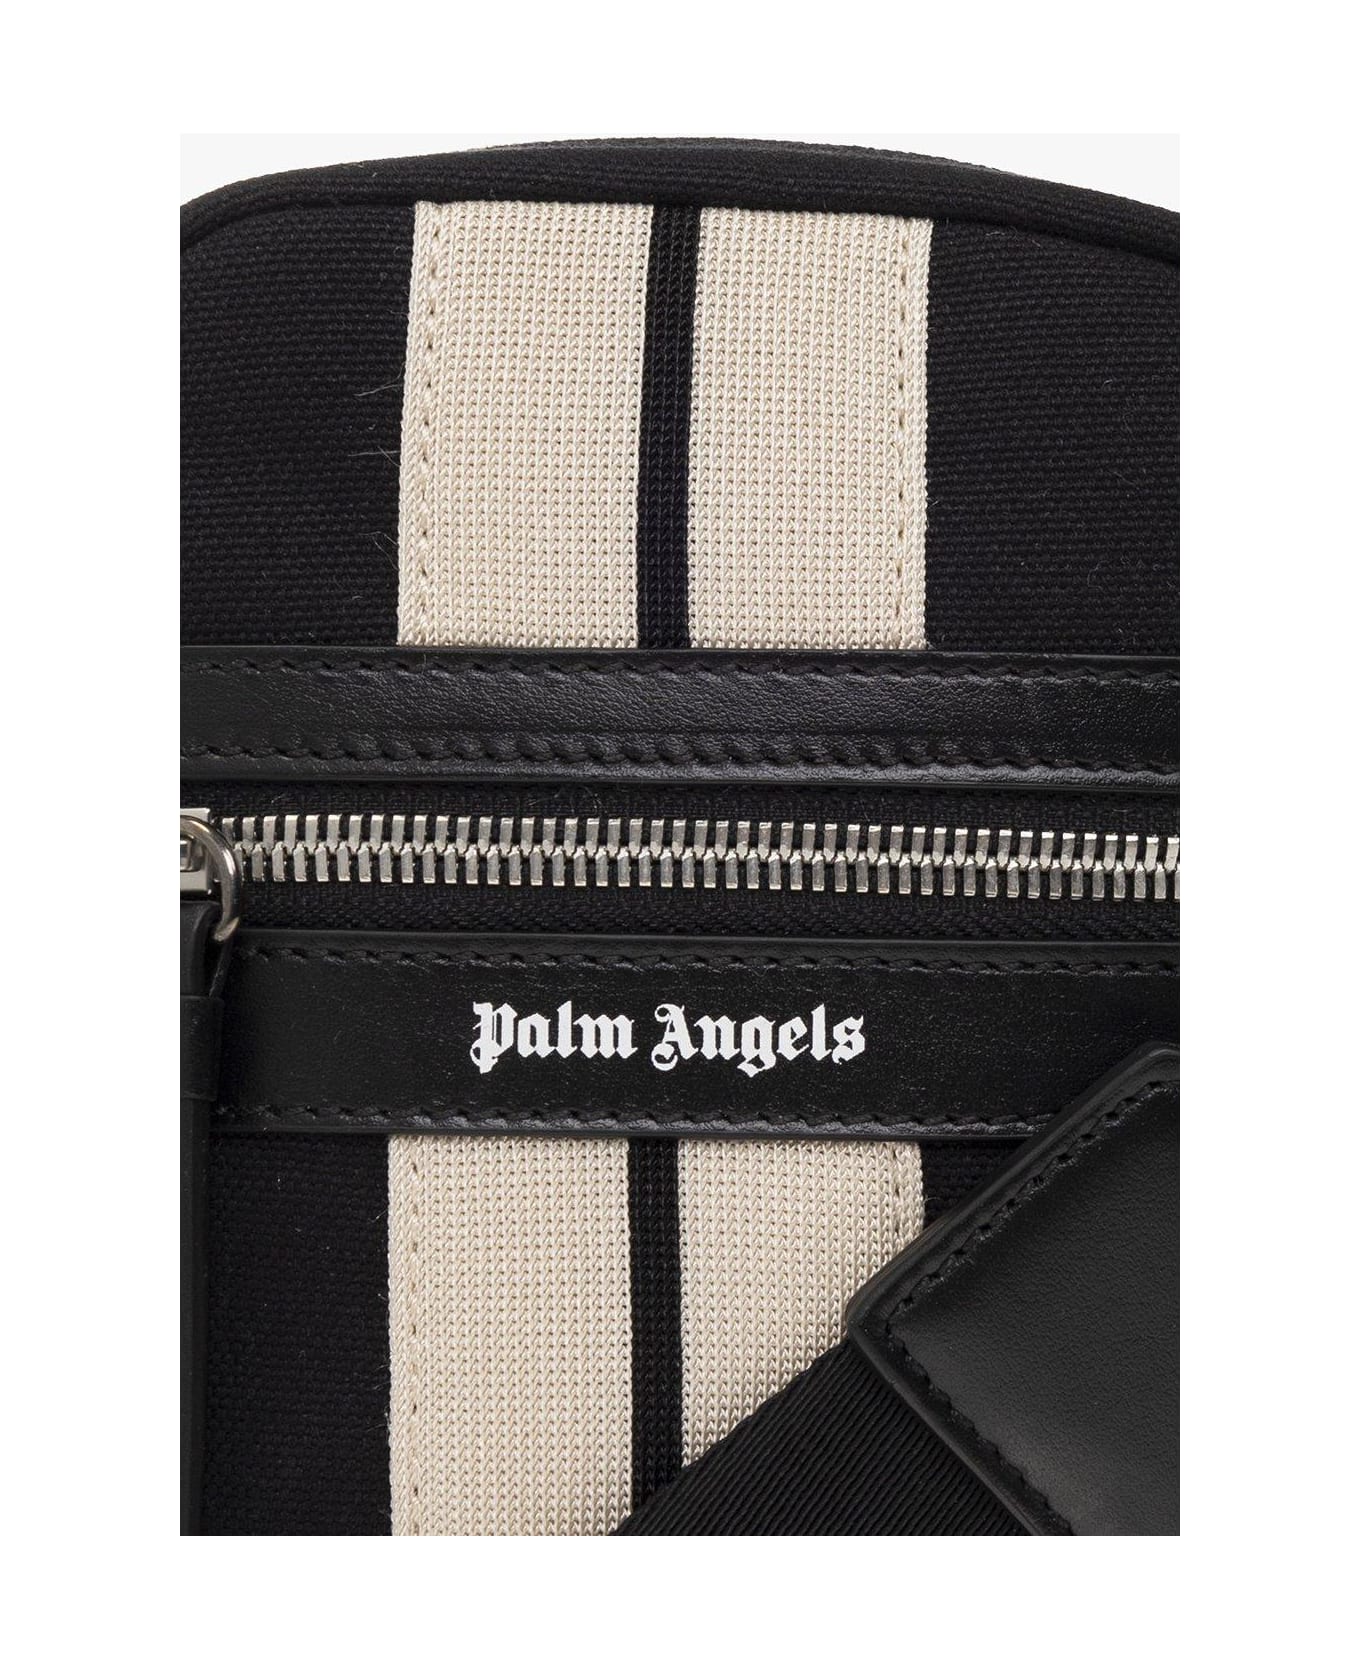 Palm Angels Logo Printed Zipped Messenger Bag - Nero bianco